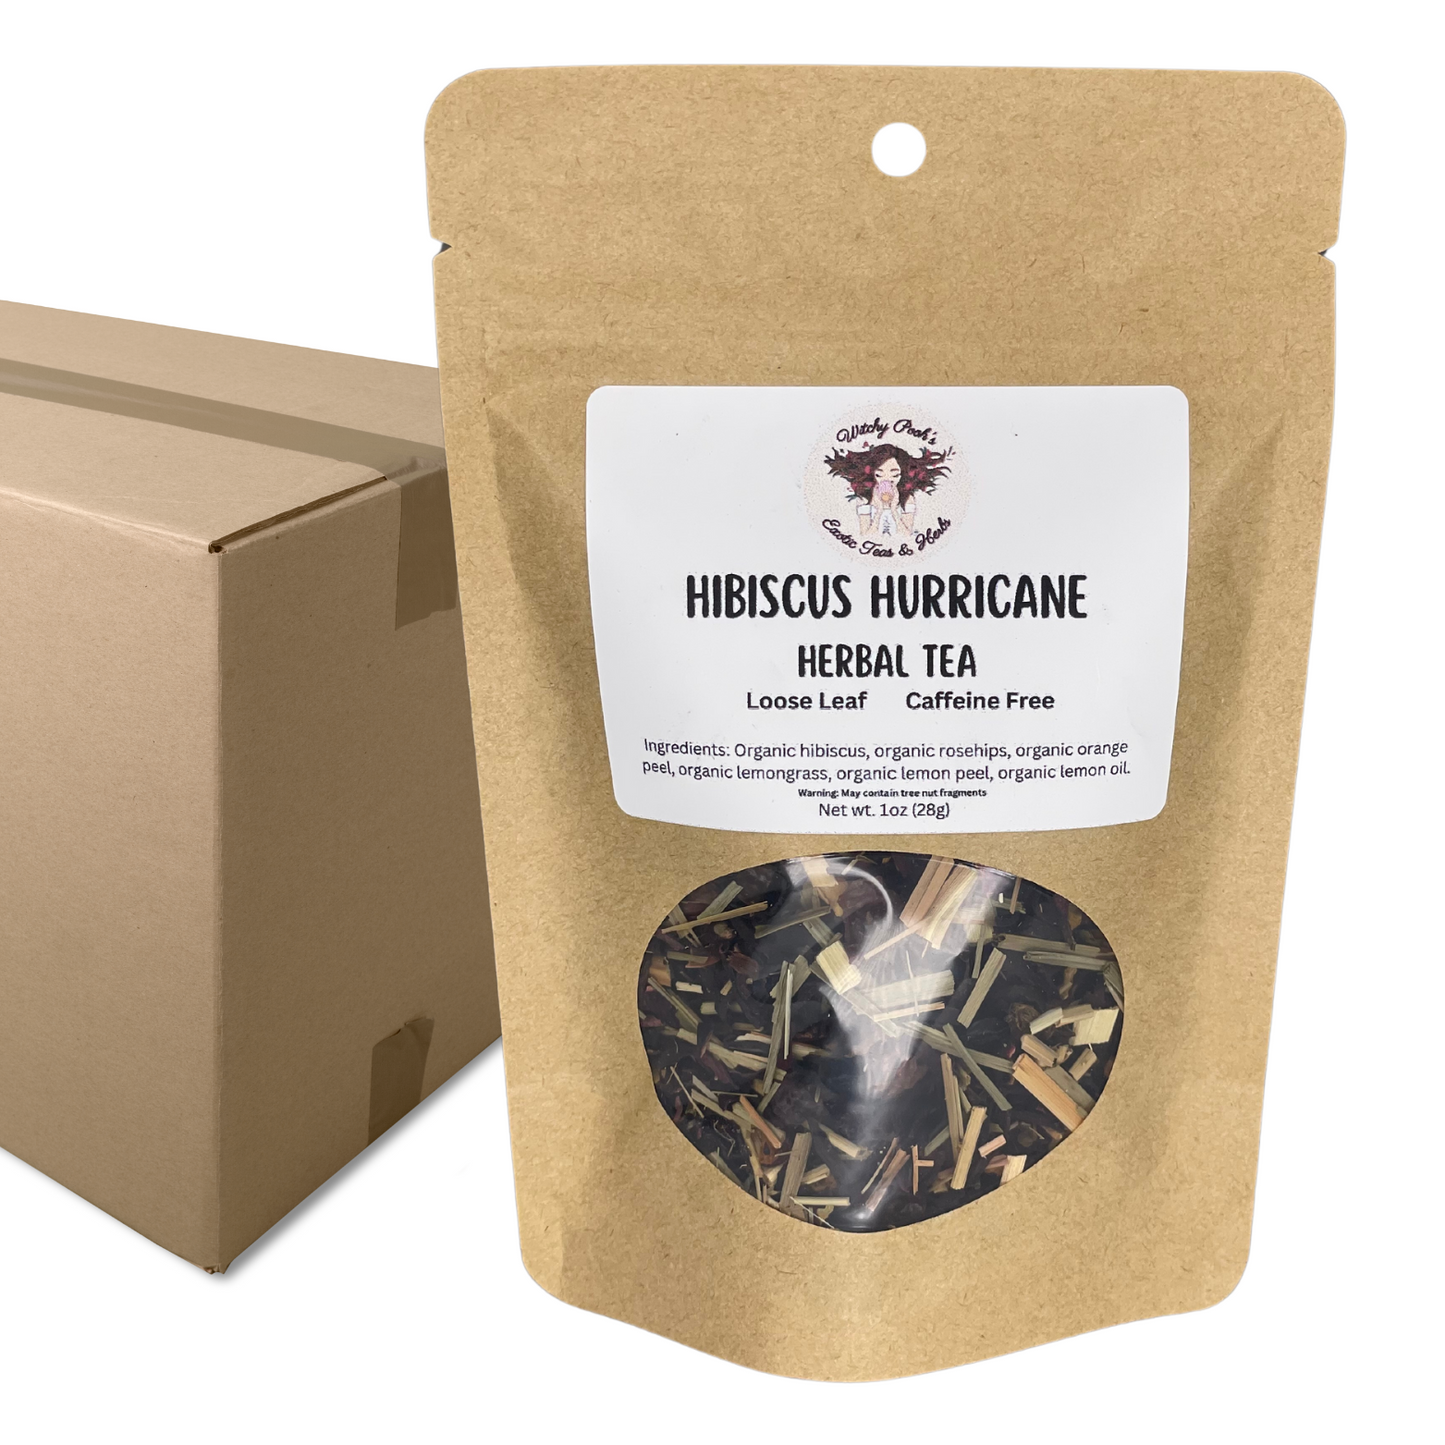 Hibiscus Hurricane Organic Loose Leaf Herbal Fruit Tea, Caffeine Free